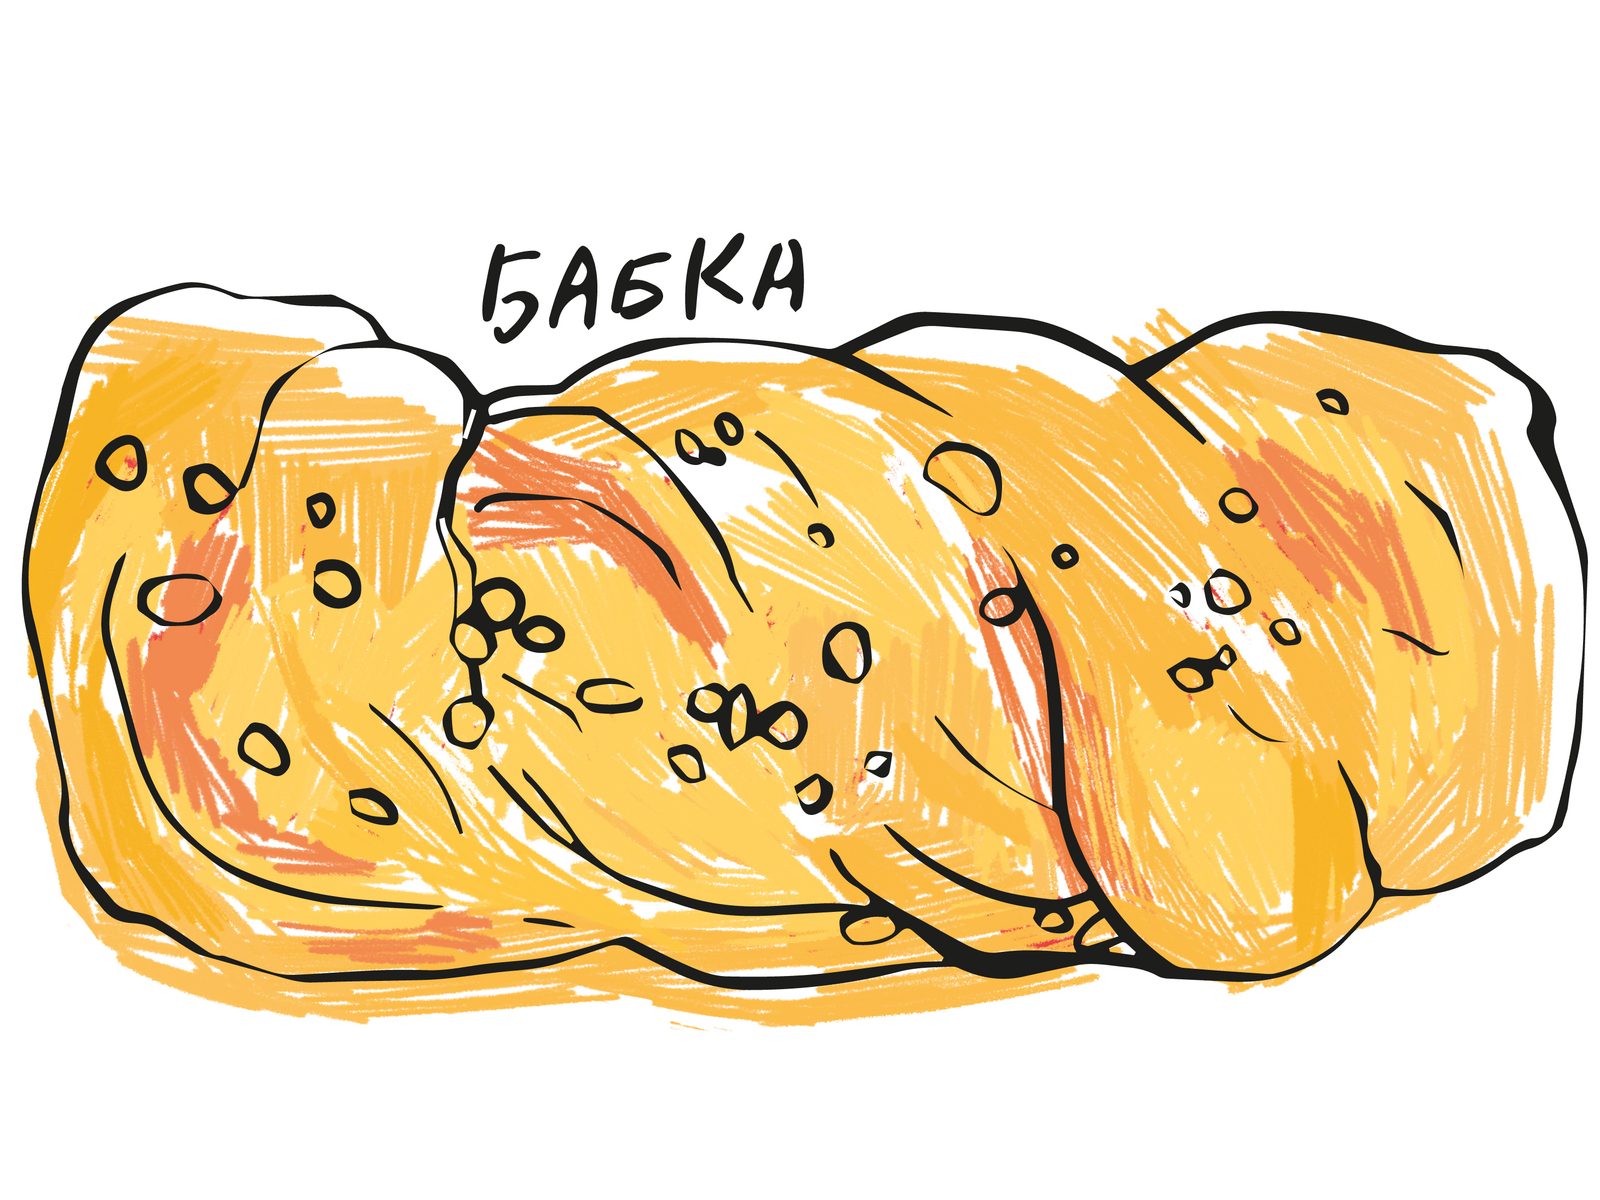 BABKA BAKERY - ilustration by Katerina Skorohod on Dribbble